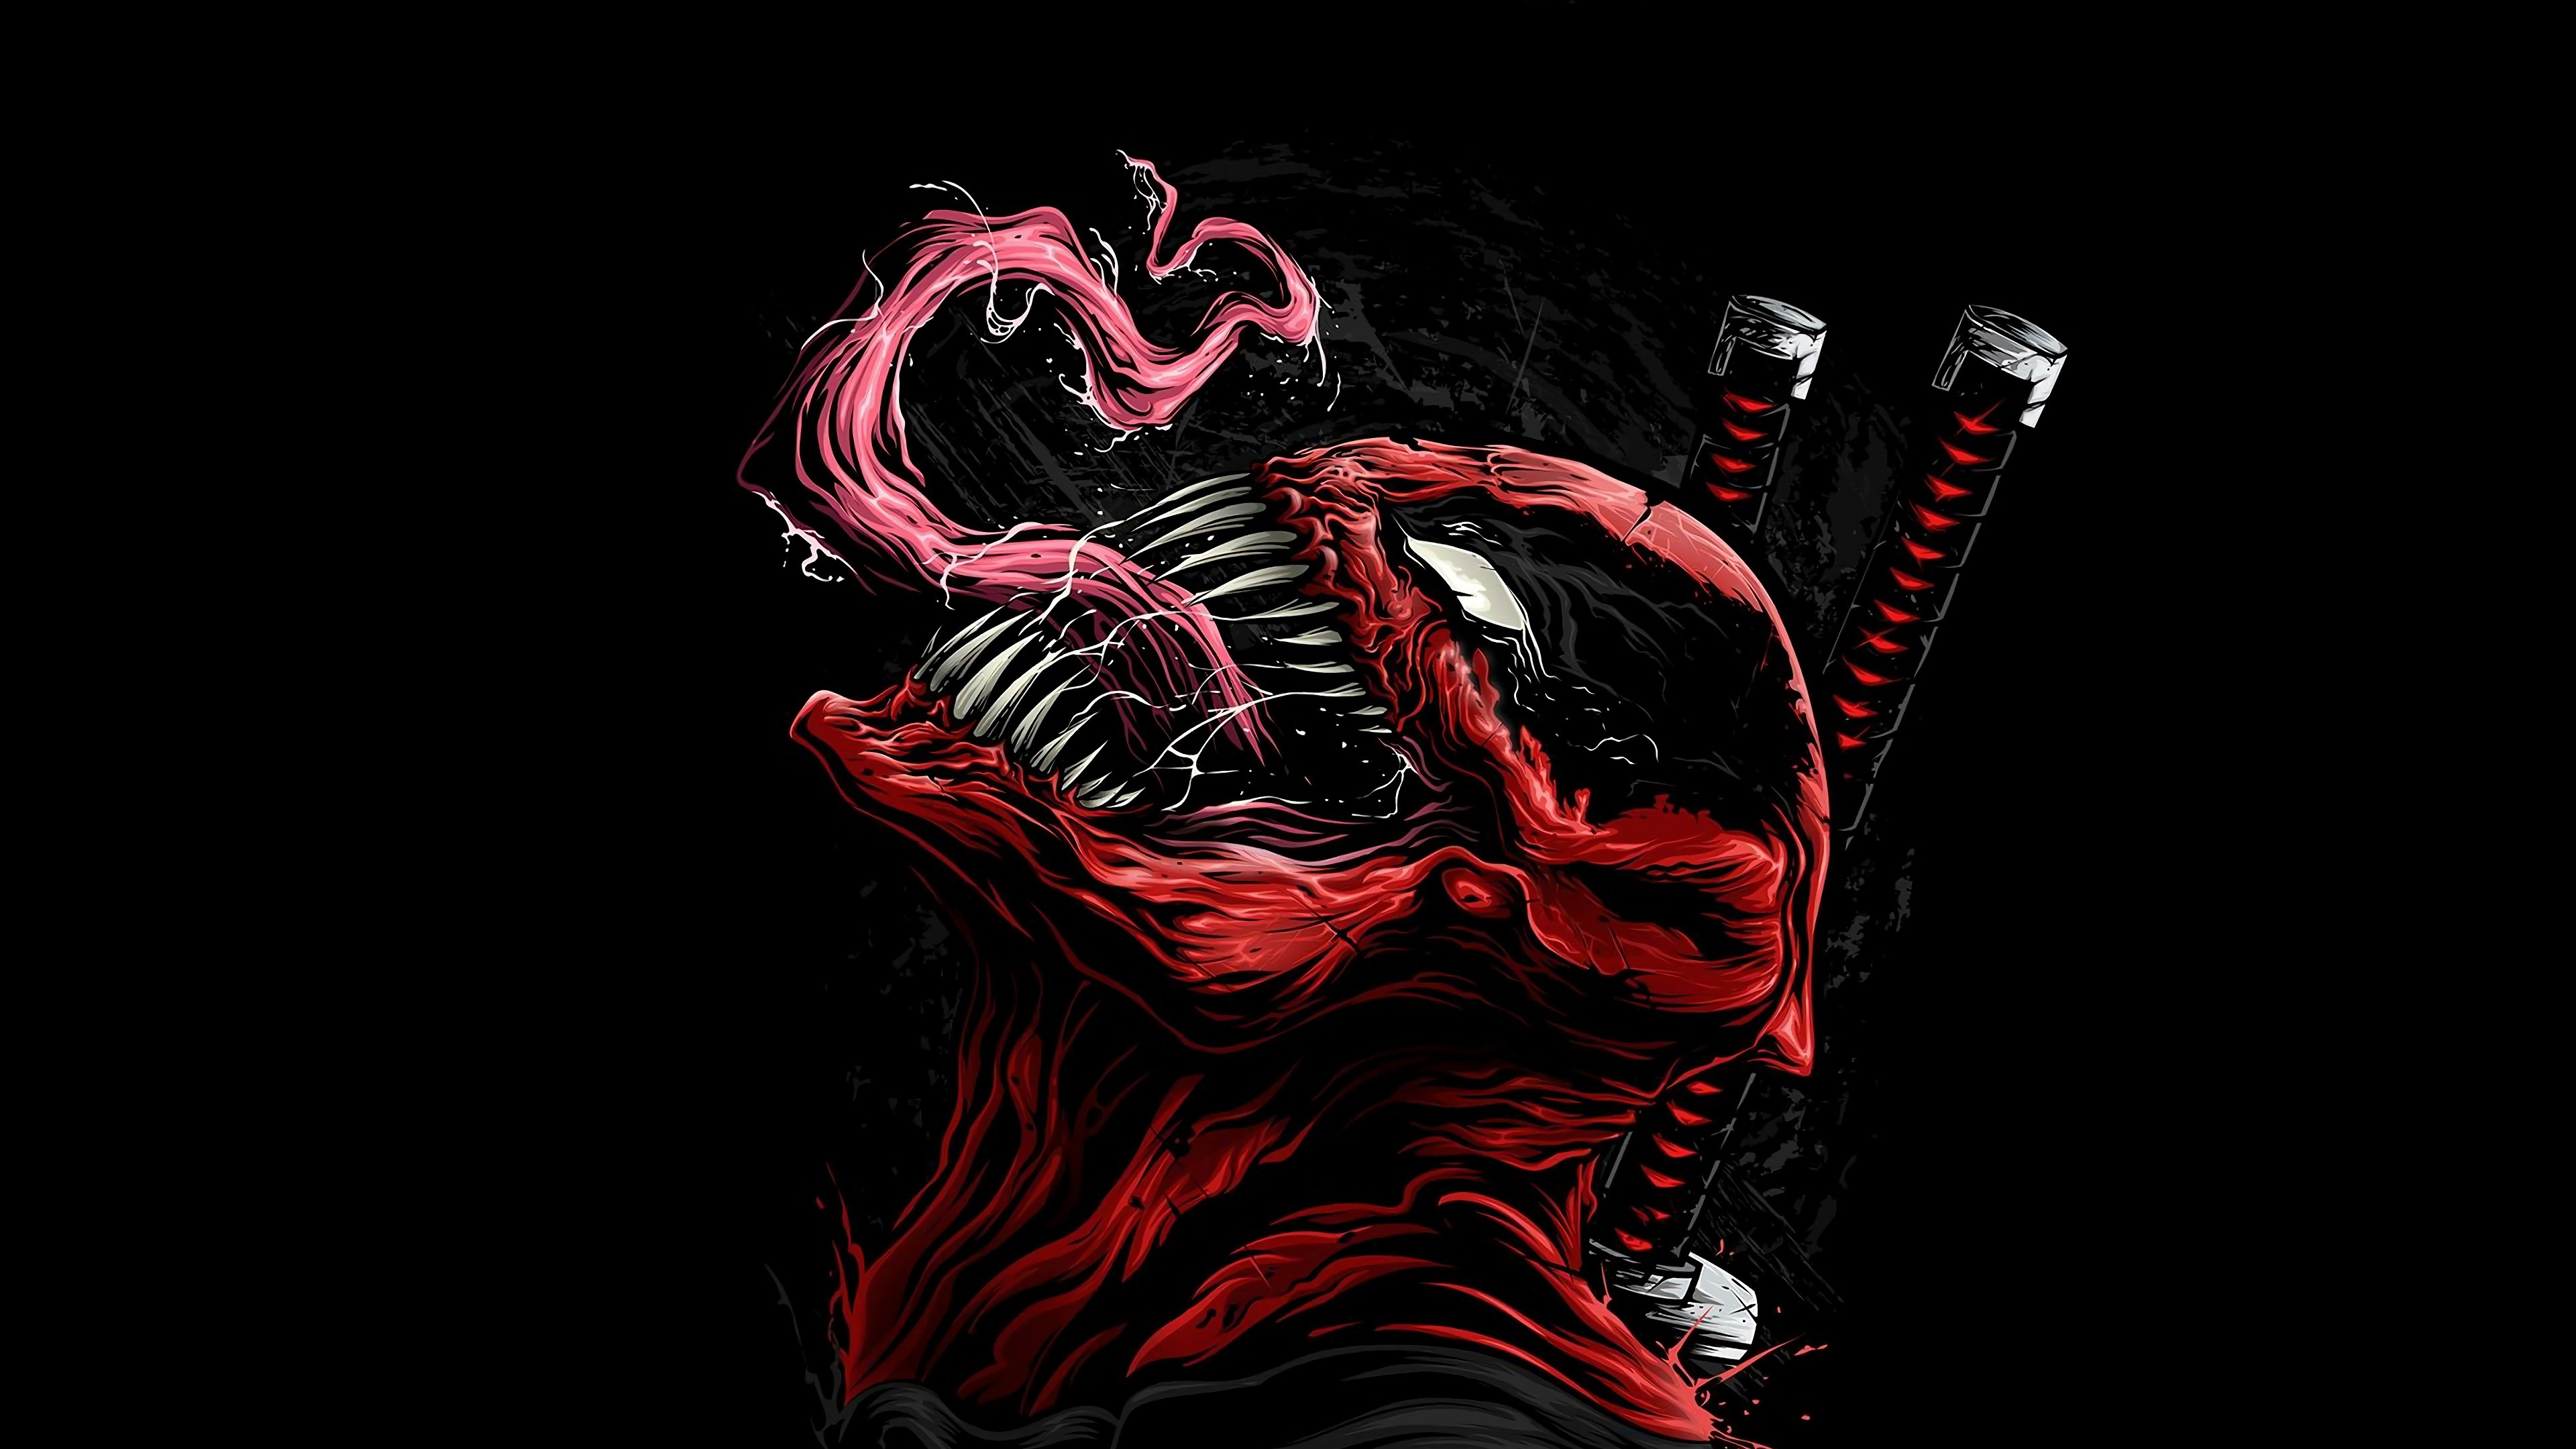 General 3840x2160 Venom artwork Venompool black background fangs tongues tongue out comic art antiheroes creature